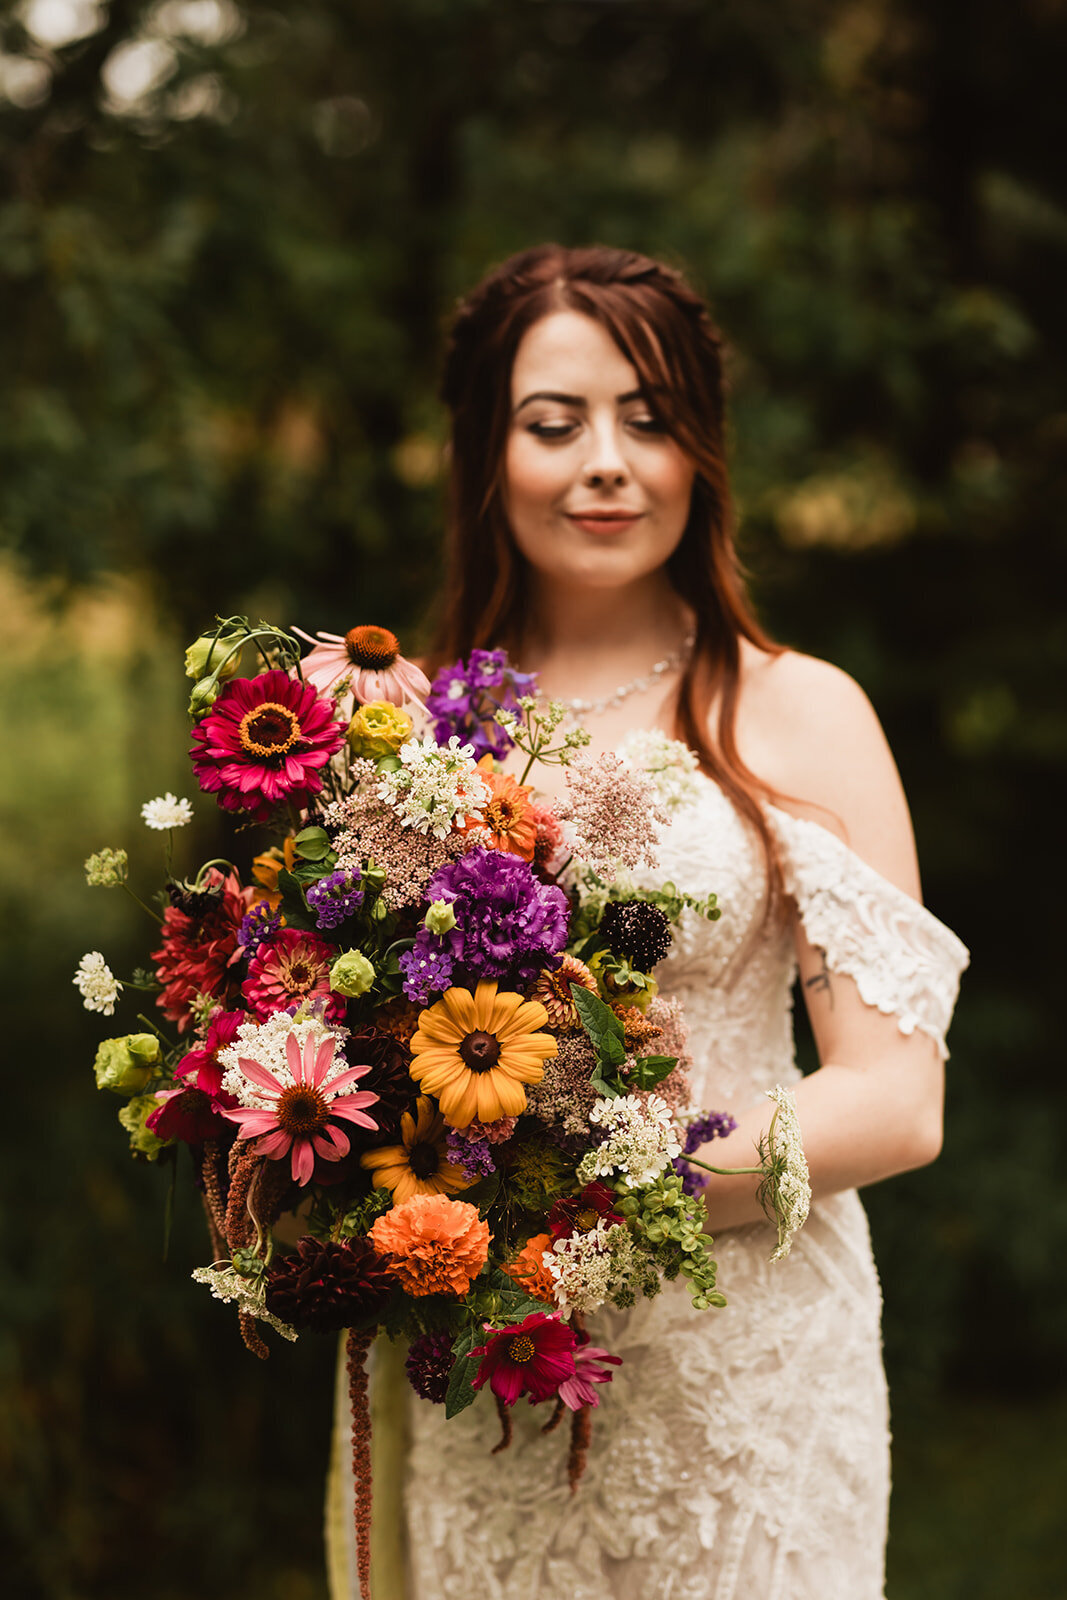 Jessica-Rae-Schulz-Edmonton-Alberta-Elopement-Wedding-Photographer-Love-Emotive-Candid-Connection-11